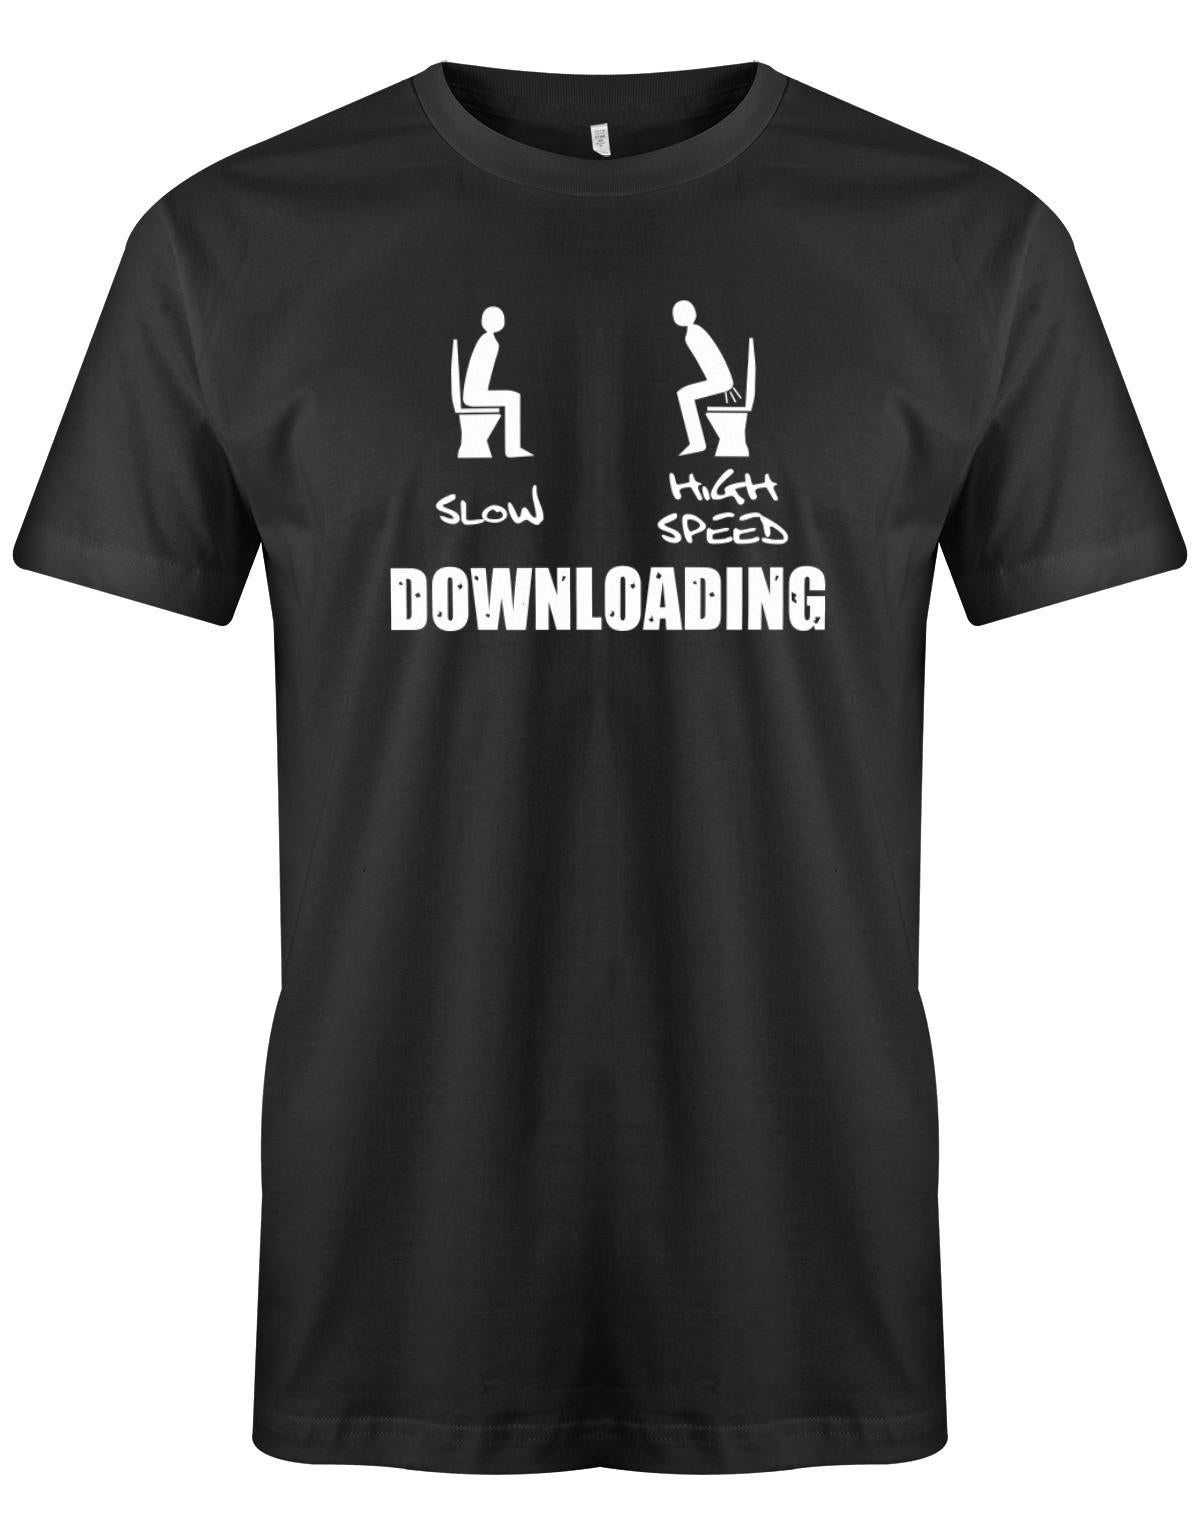 Downloading-Slow-Highspeed-Gamer-Shirt-Schwarz